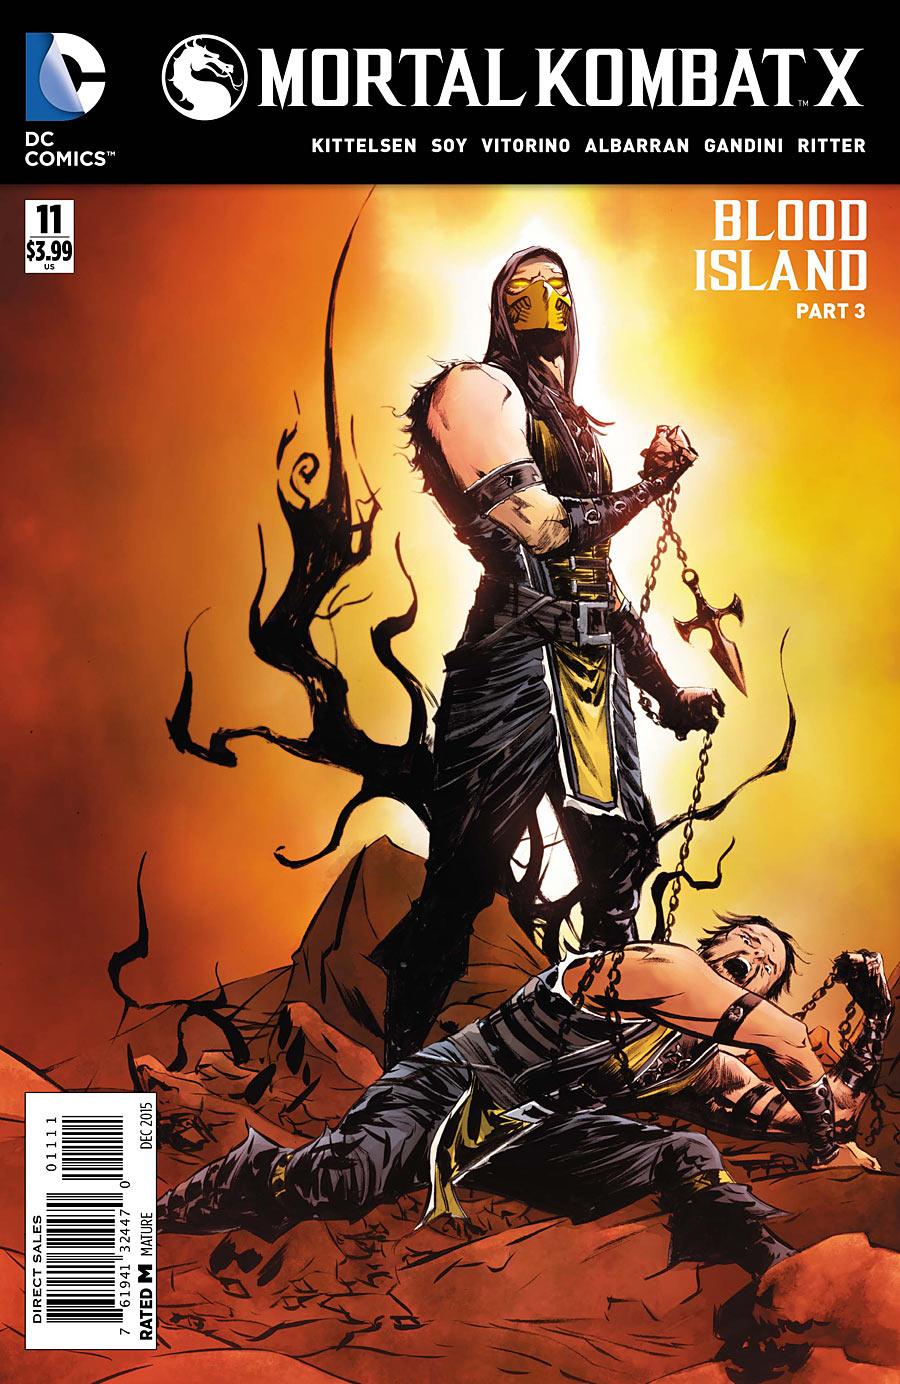 Mortal Kombat X Vol. 1 #11